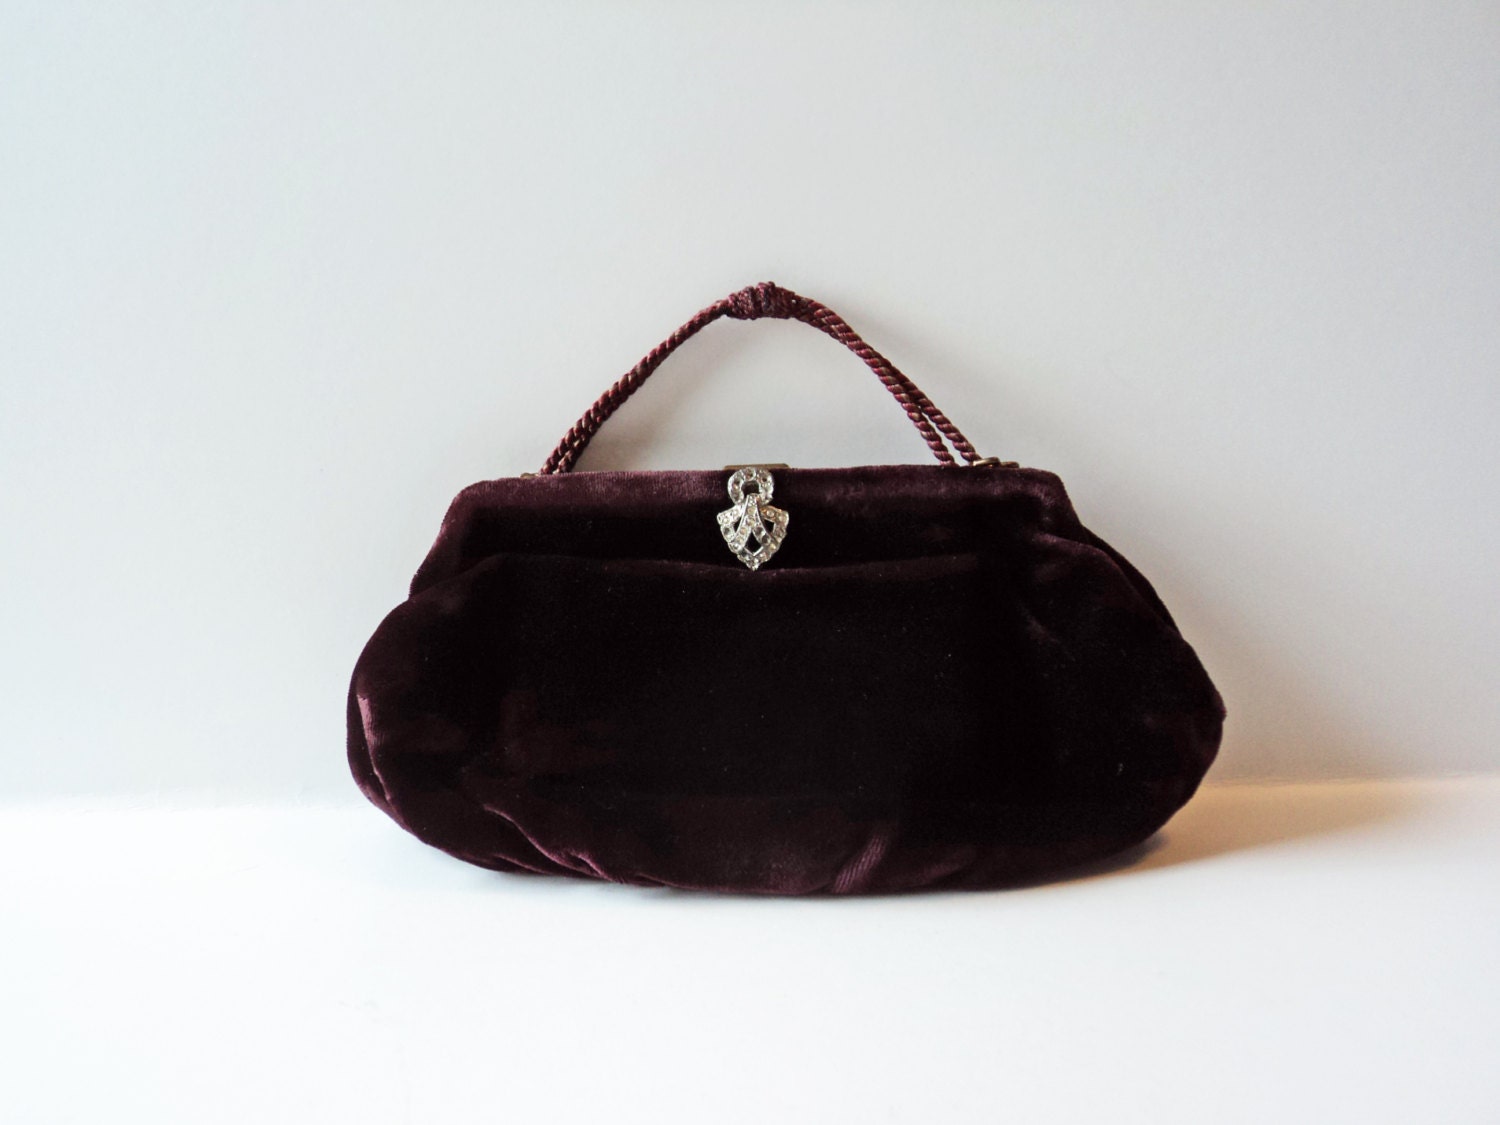 Velvet Evening Bag Purse Maroon Burgundy by KanariKouture on Etsy